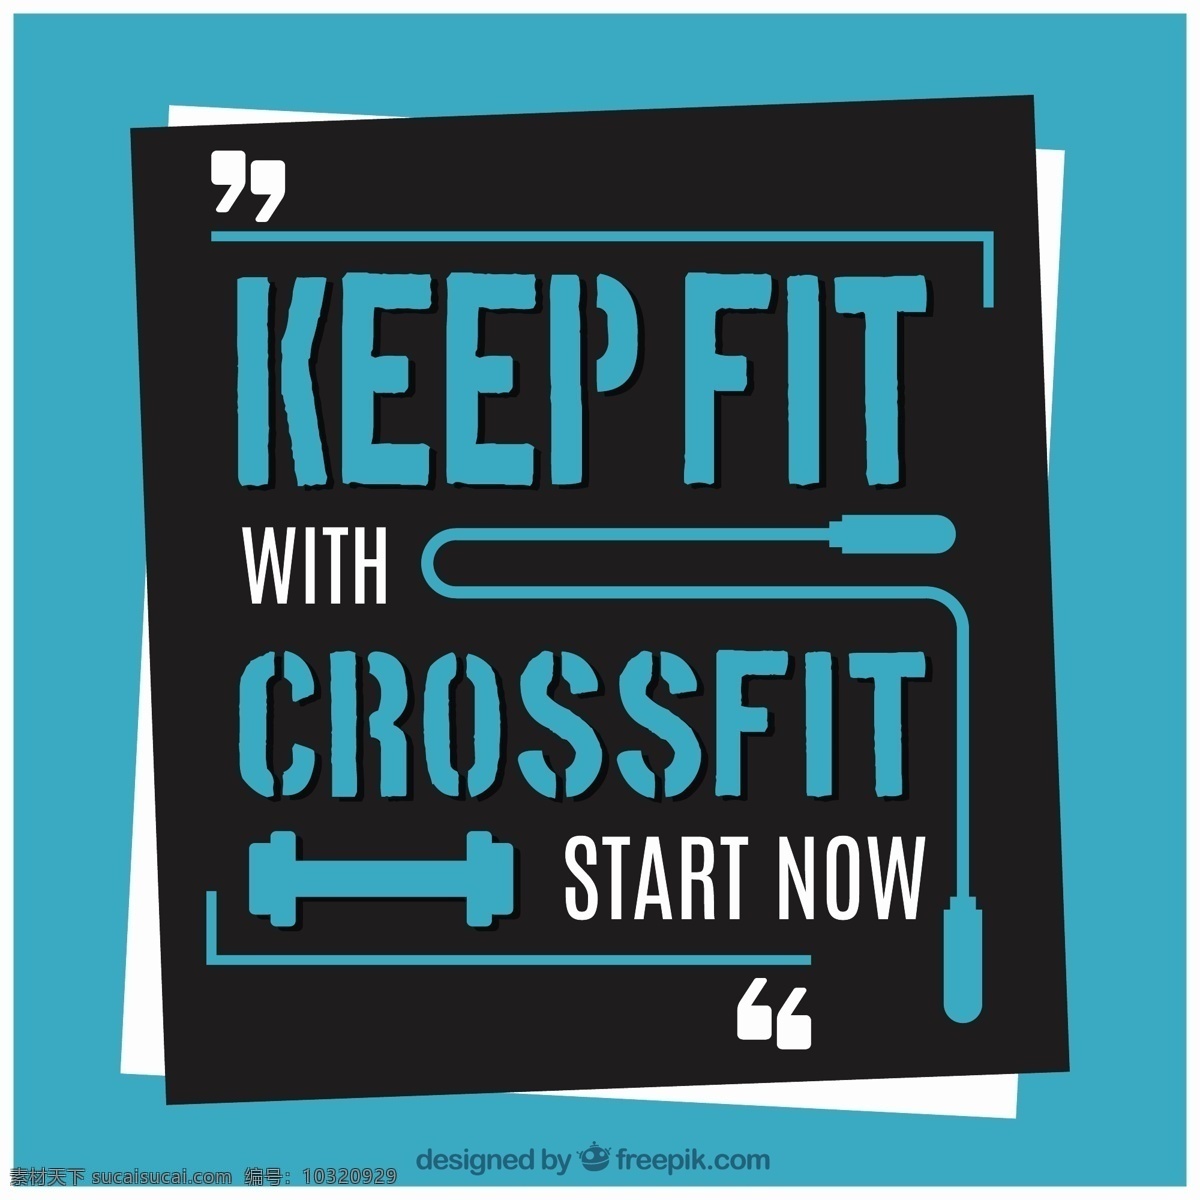 crossfit 背景 开始 报价 运动 健身 印刷术 健康 墙纸 字体 文本 创造性 训练 信息 文字 肌肉 重量 动机 锻炼